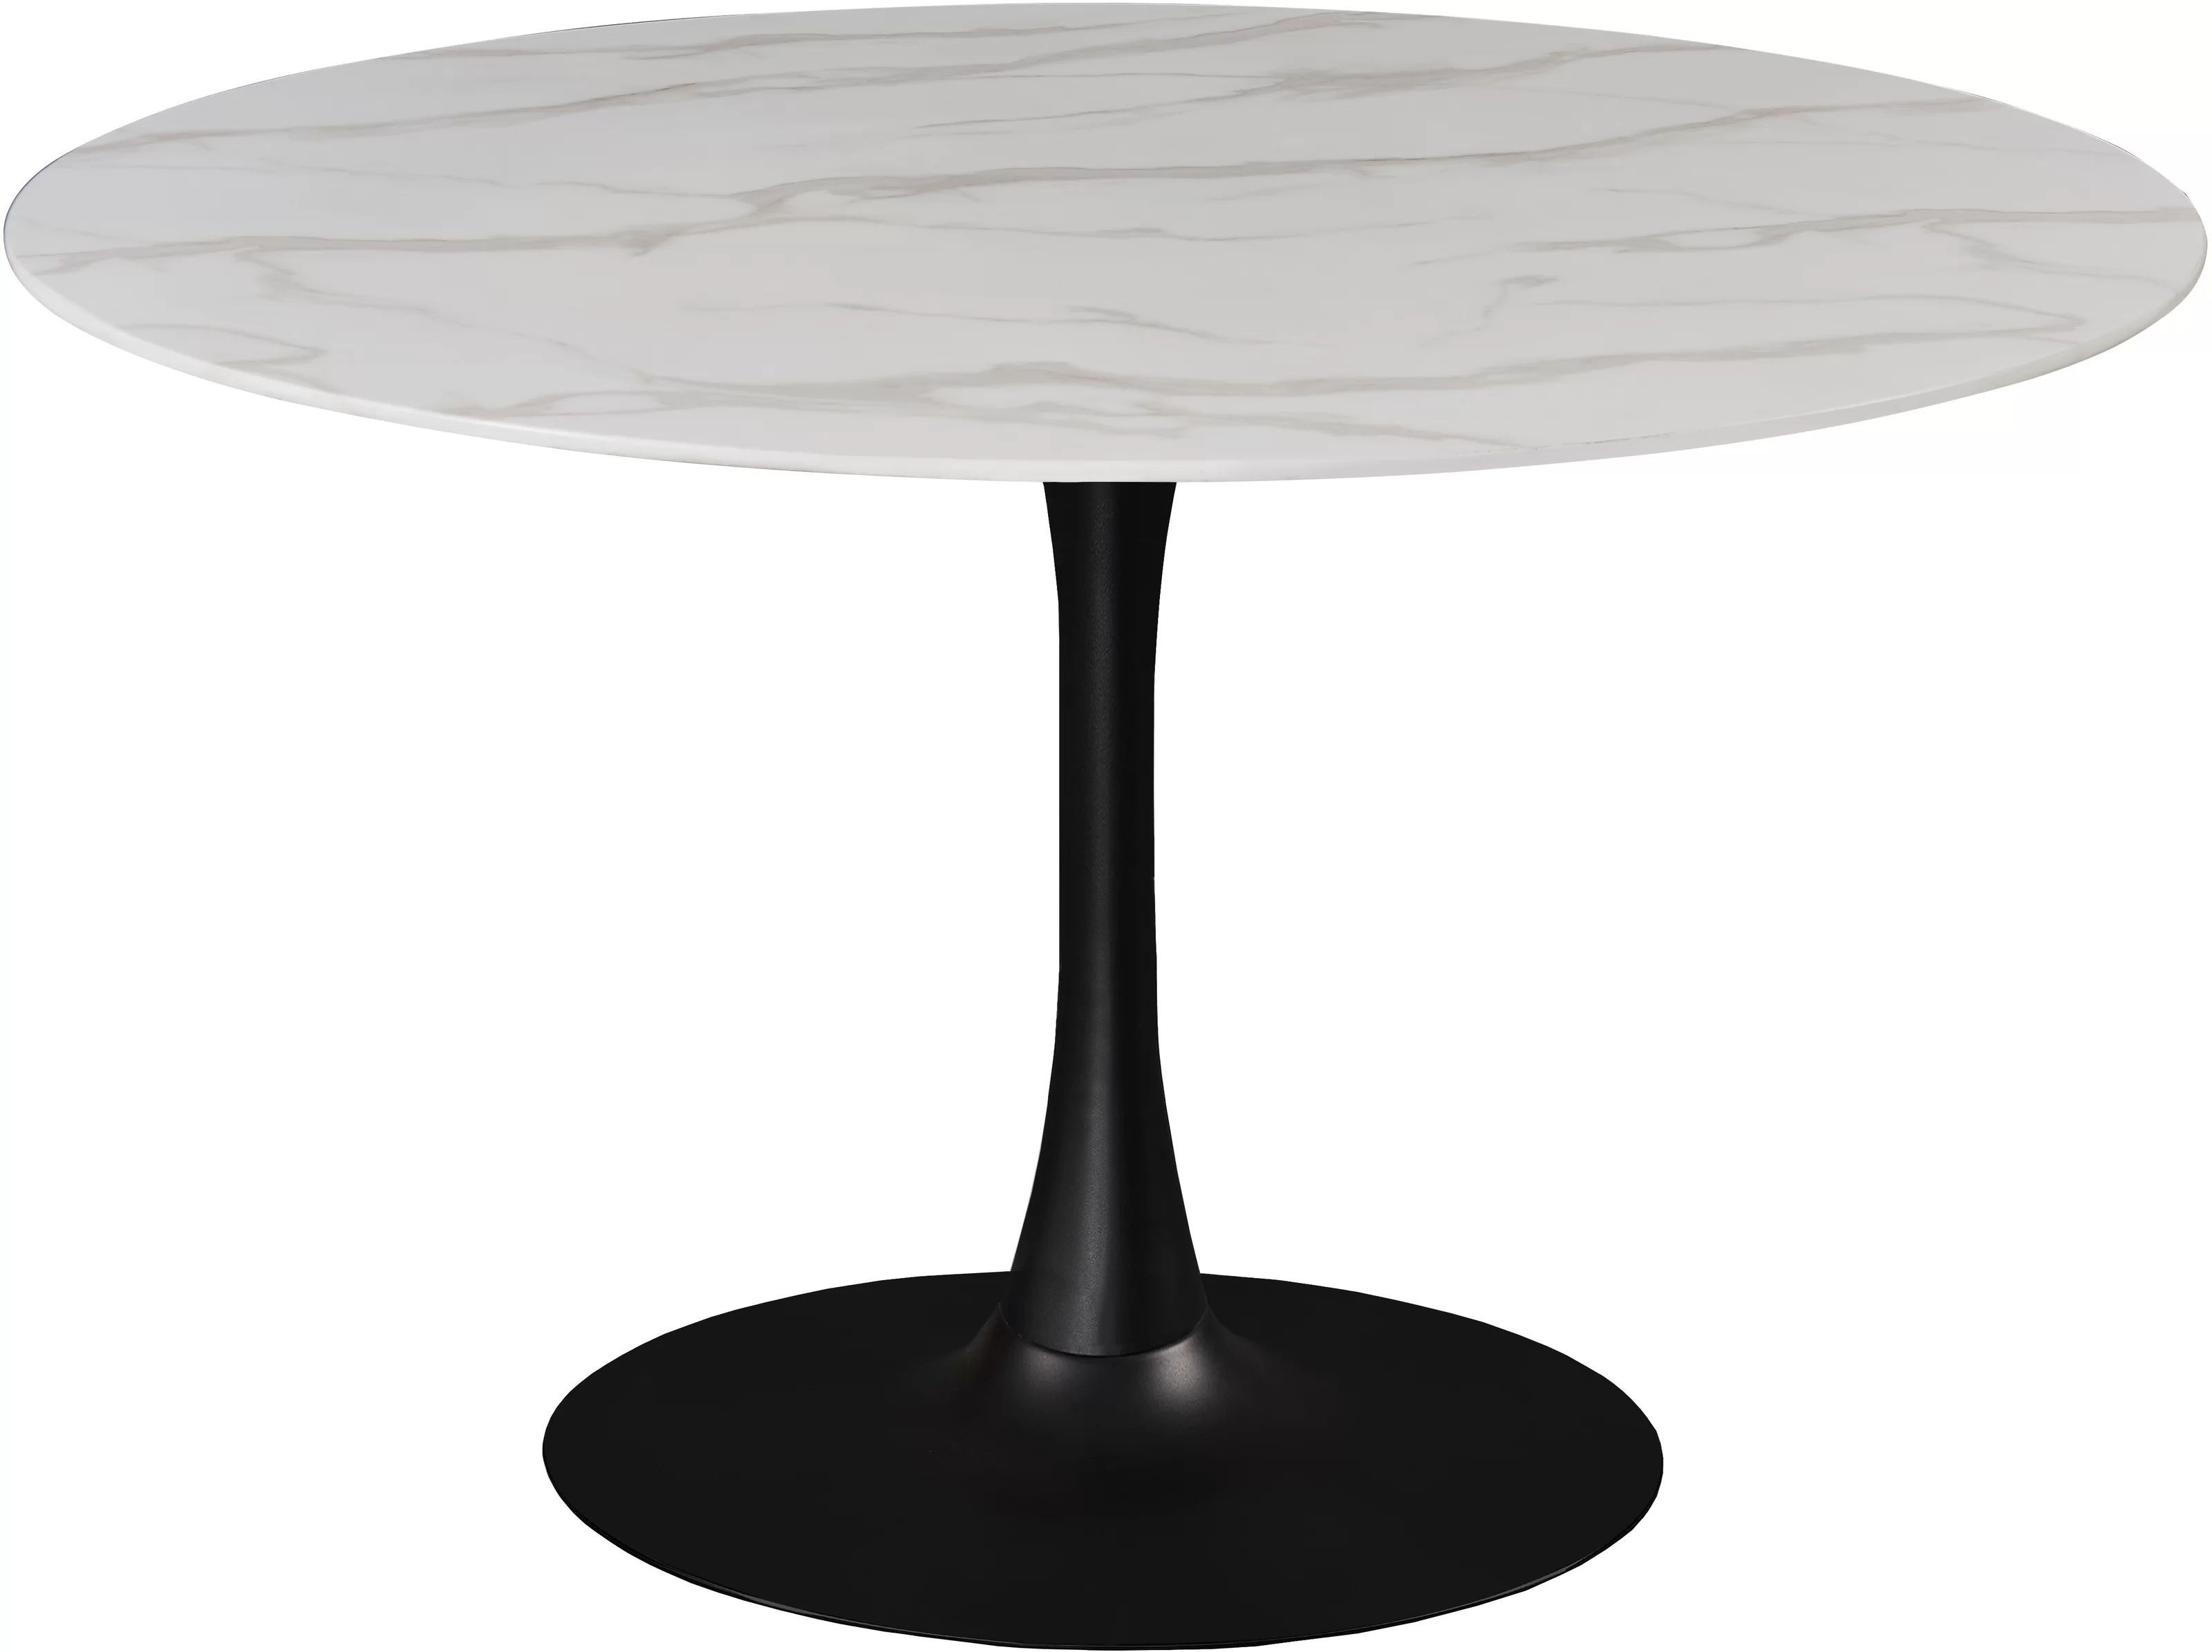 Sevinc Pedestal Dining Table | Wayfair North America